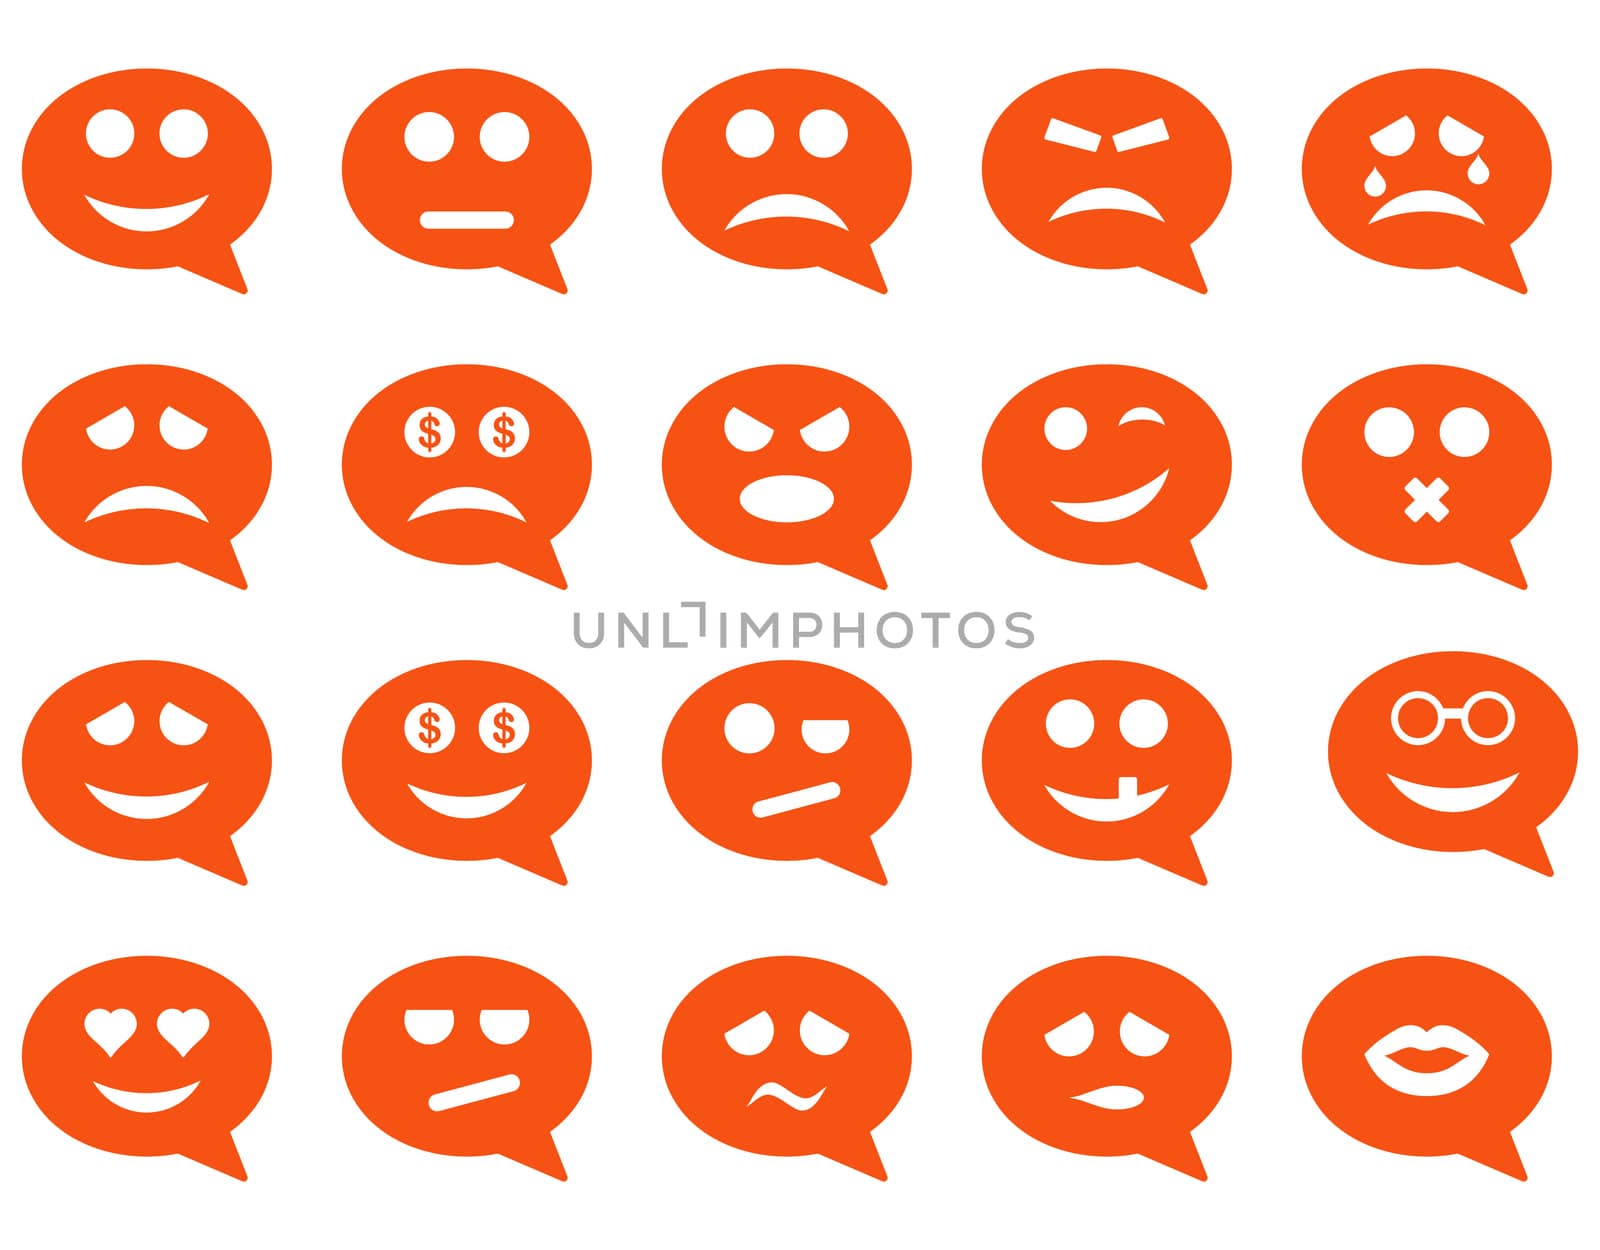 Chat emotion smile icons. Glyph set style is flat images, orange symbols, isolated on a white background.